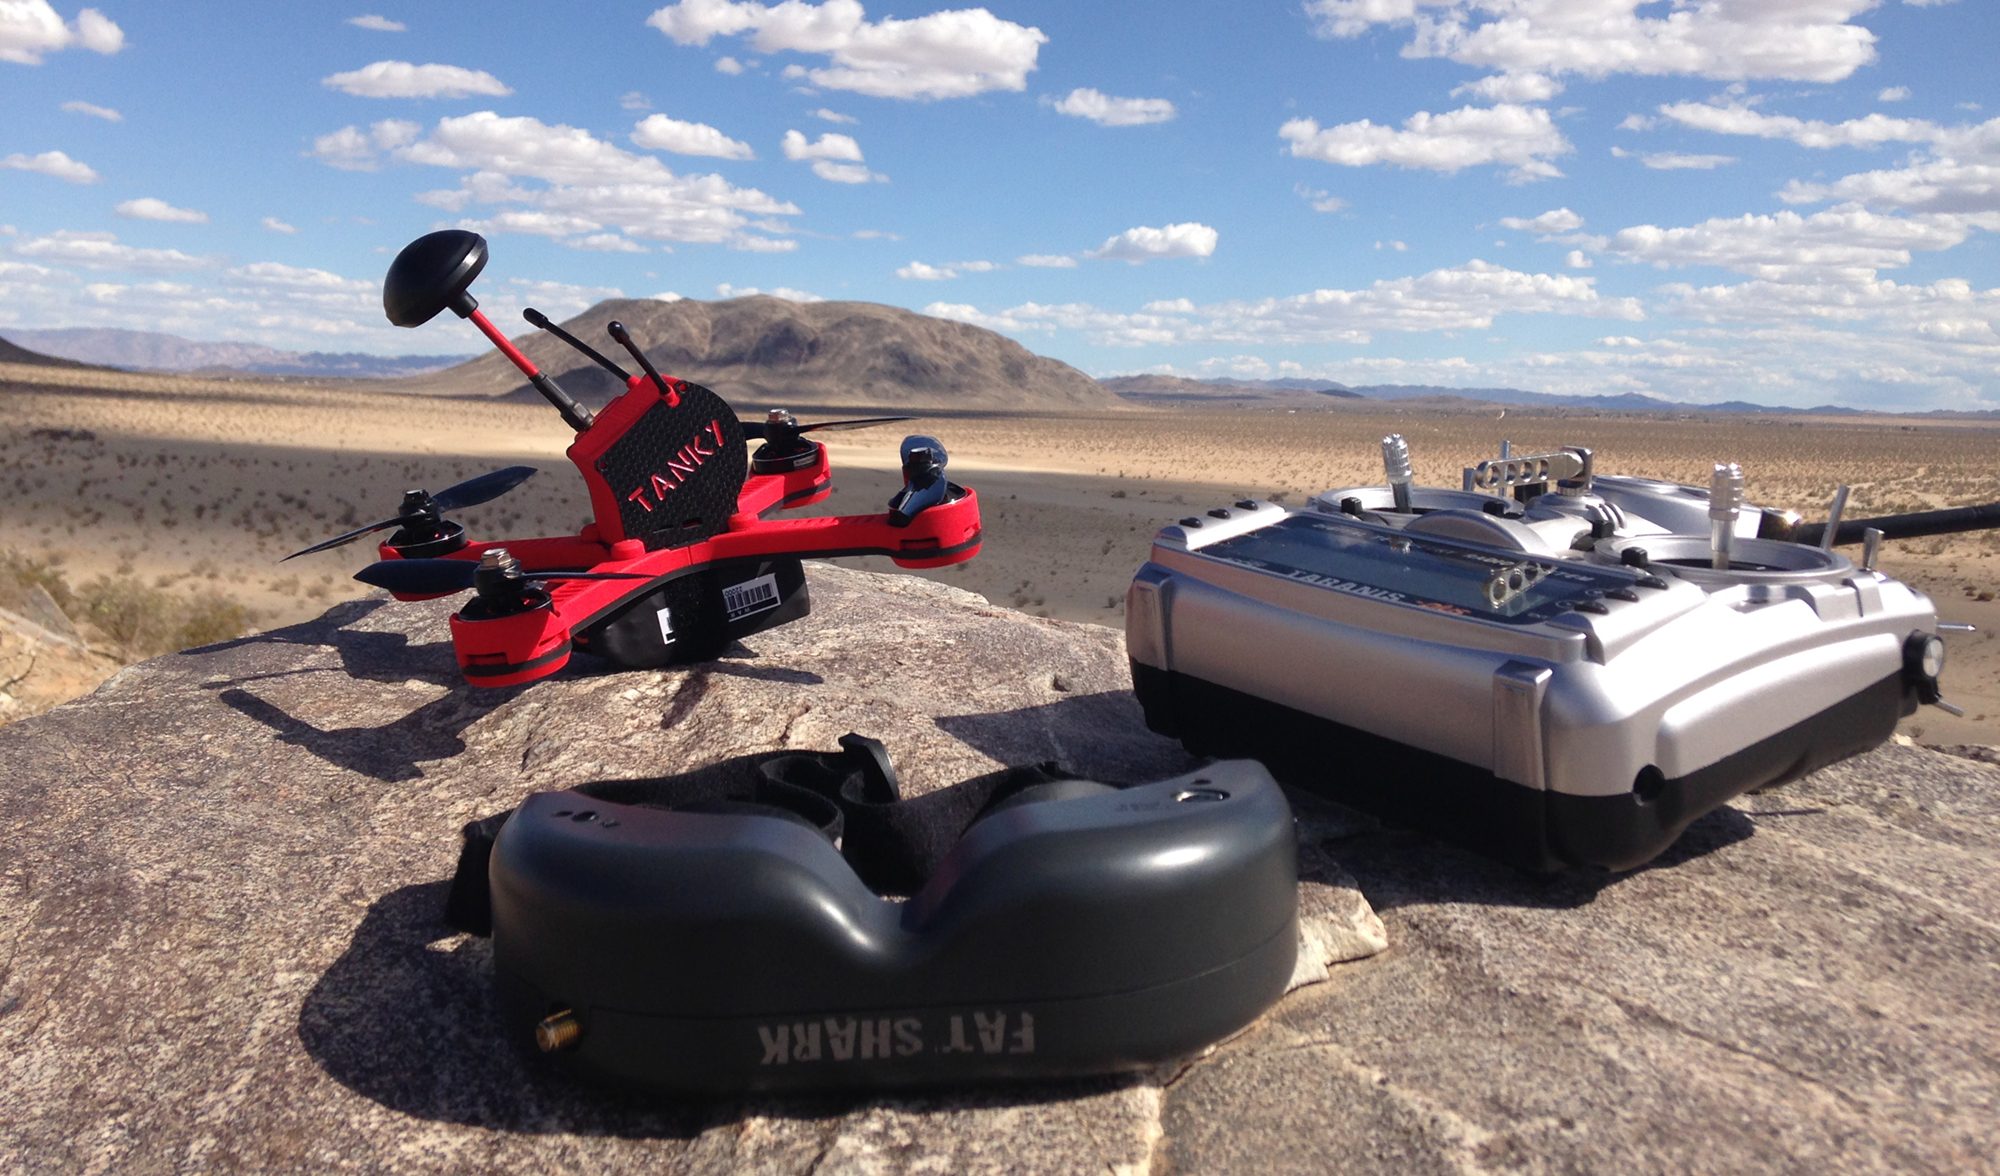 Tanky racing drone